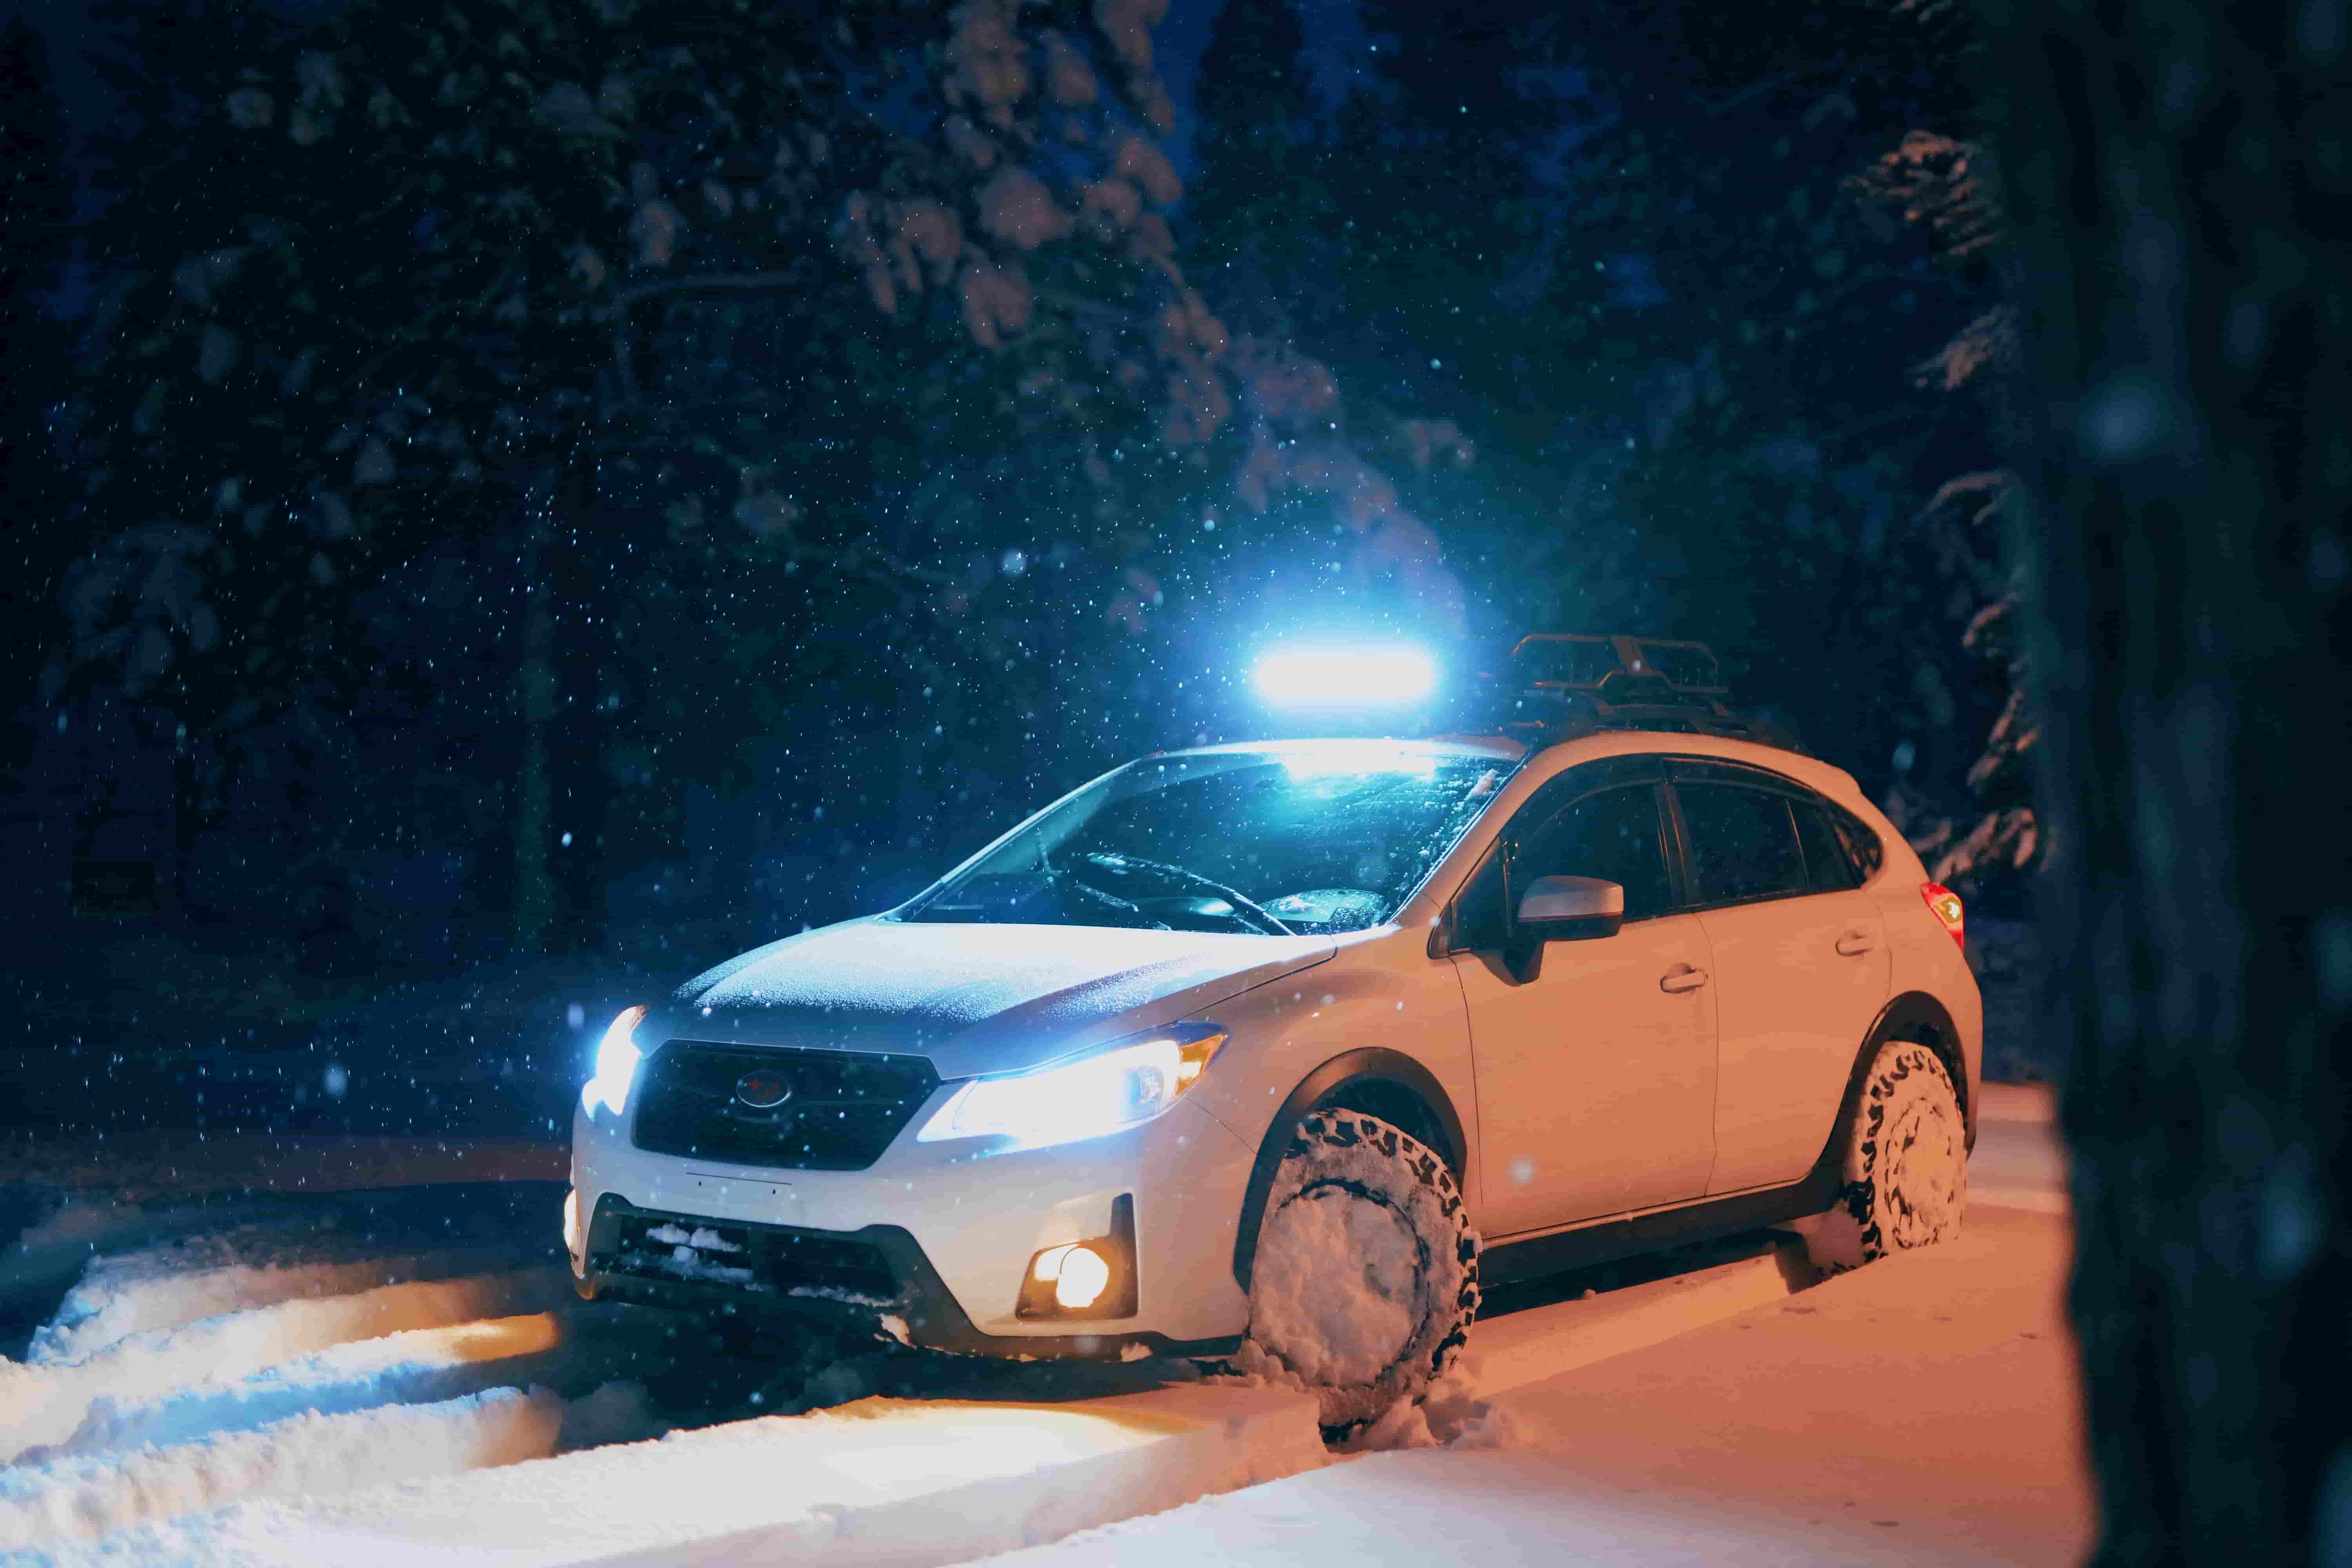 Car stuck in snow at night.